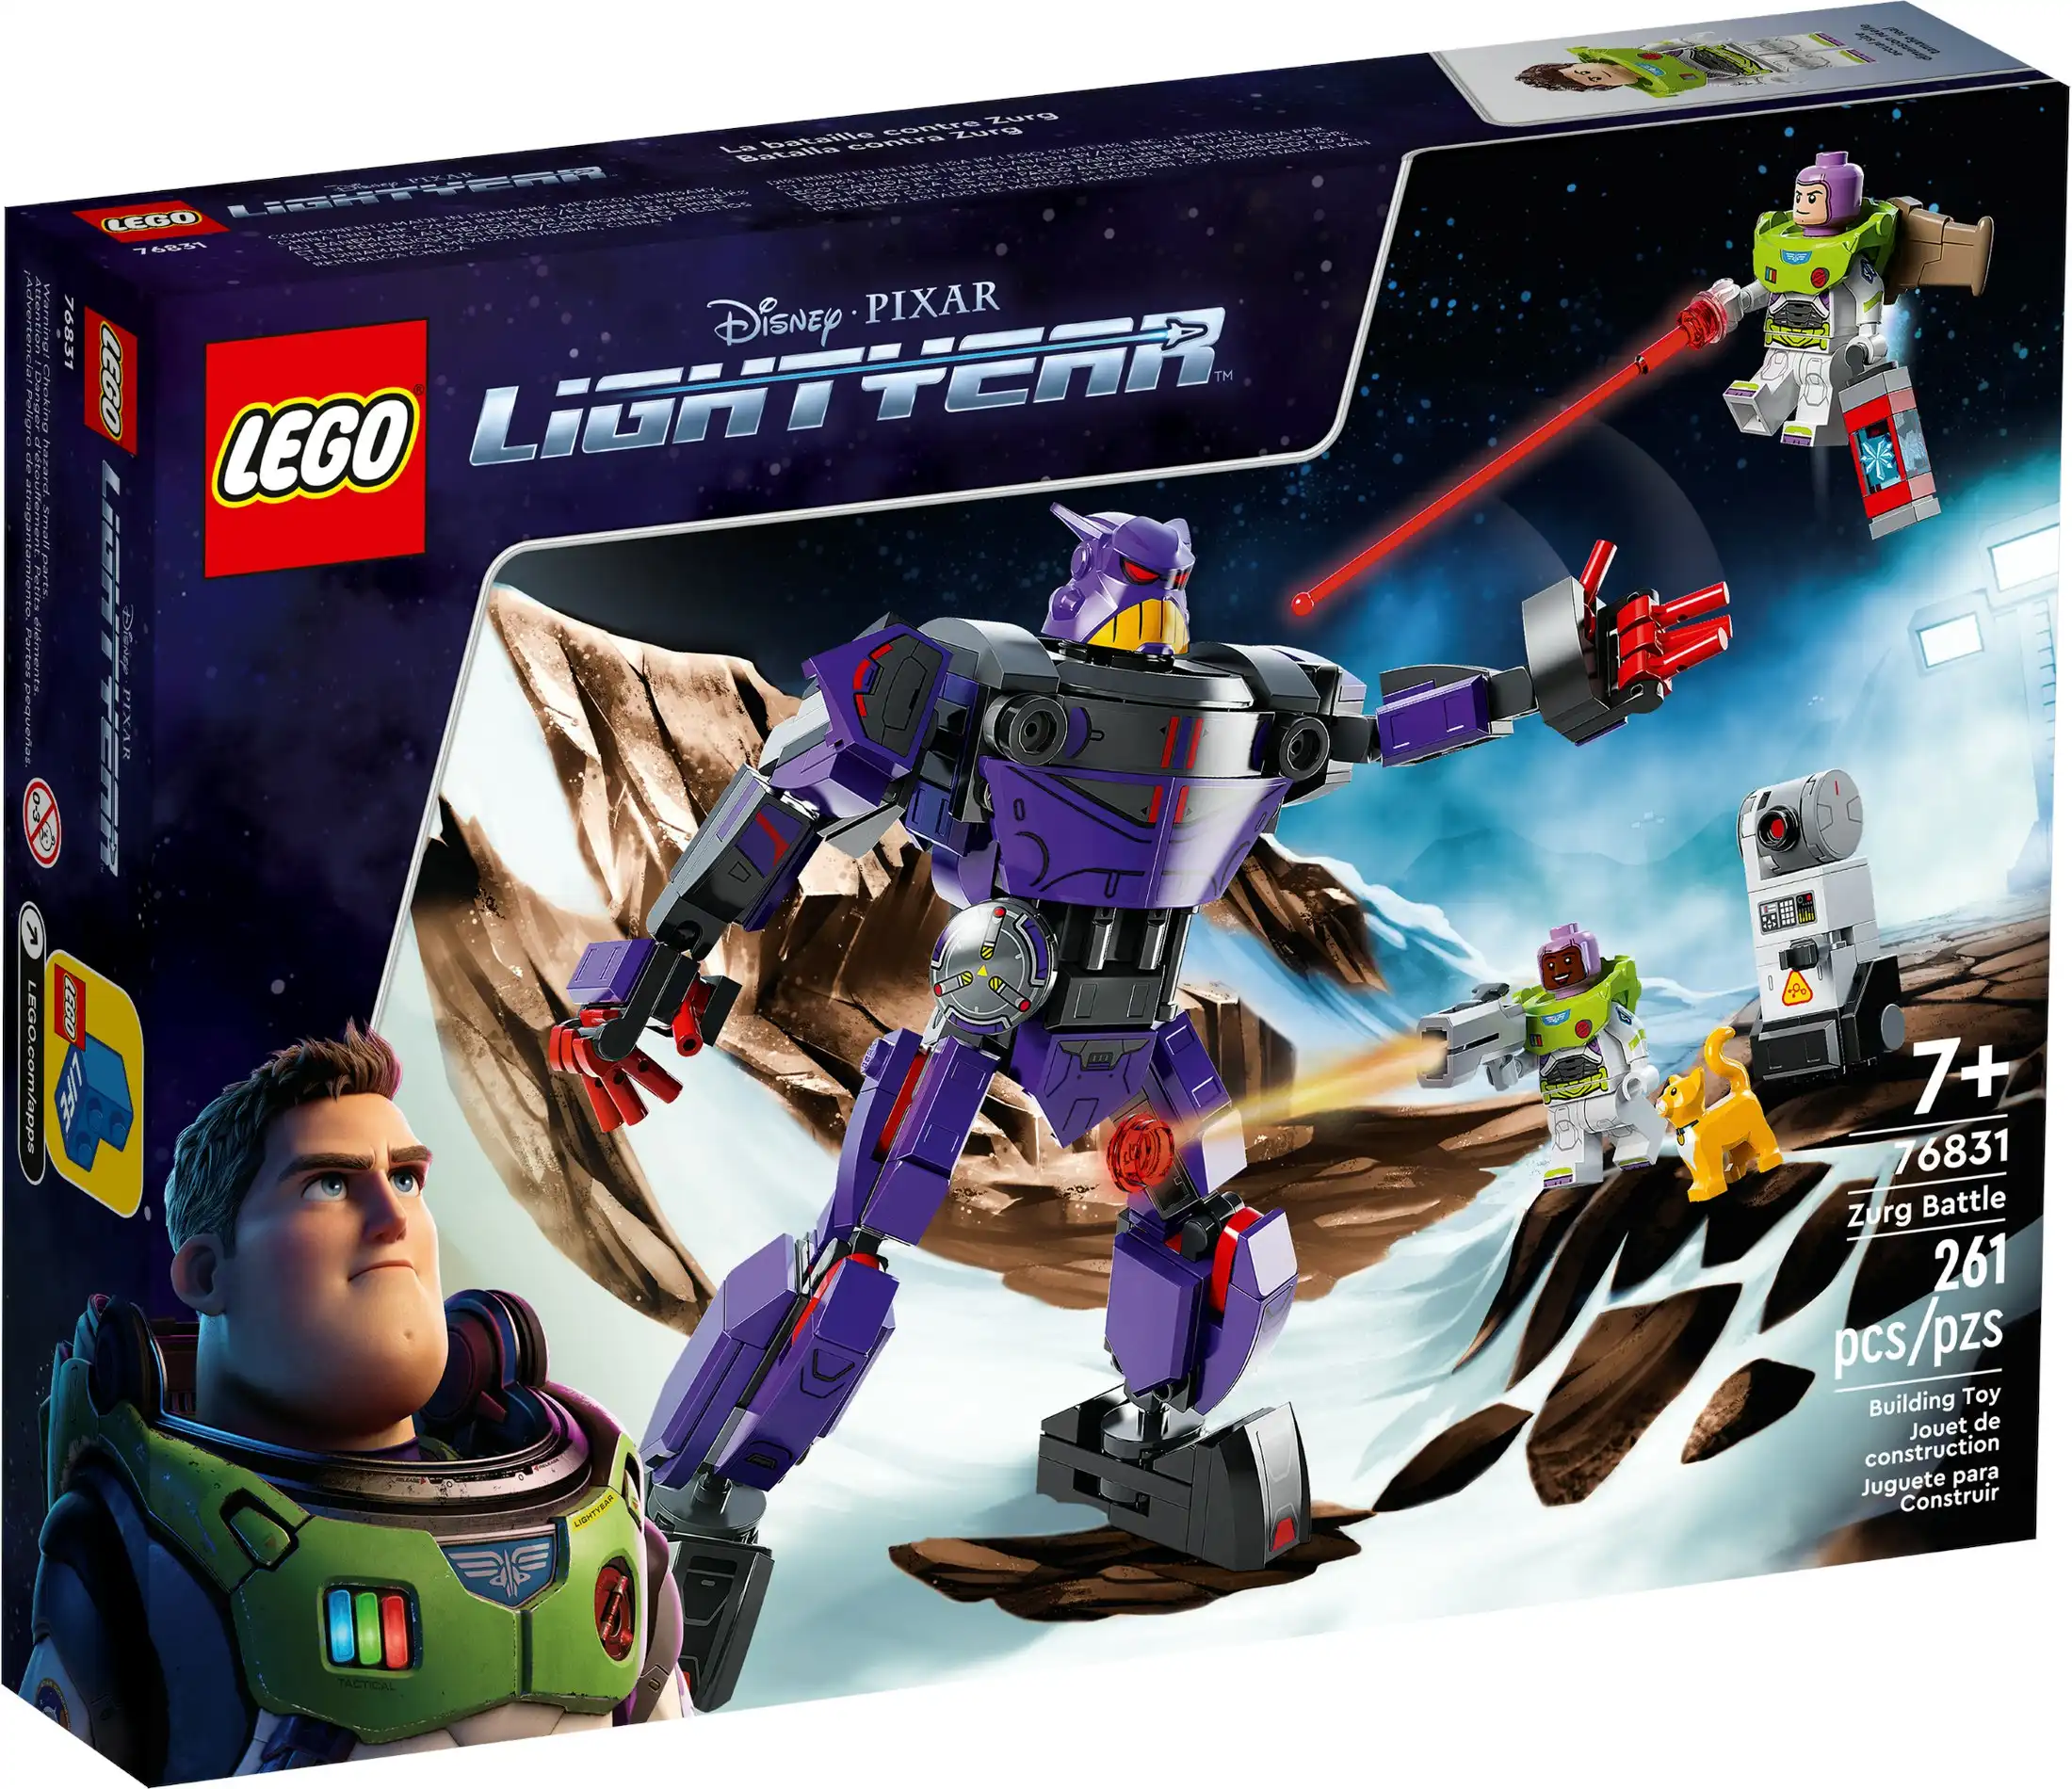 LEGO 76831 Zurg Battle - Buzz Lightyear Disney